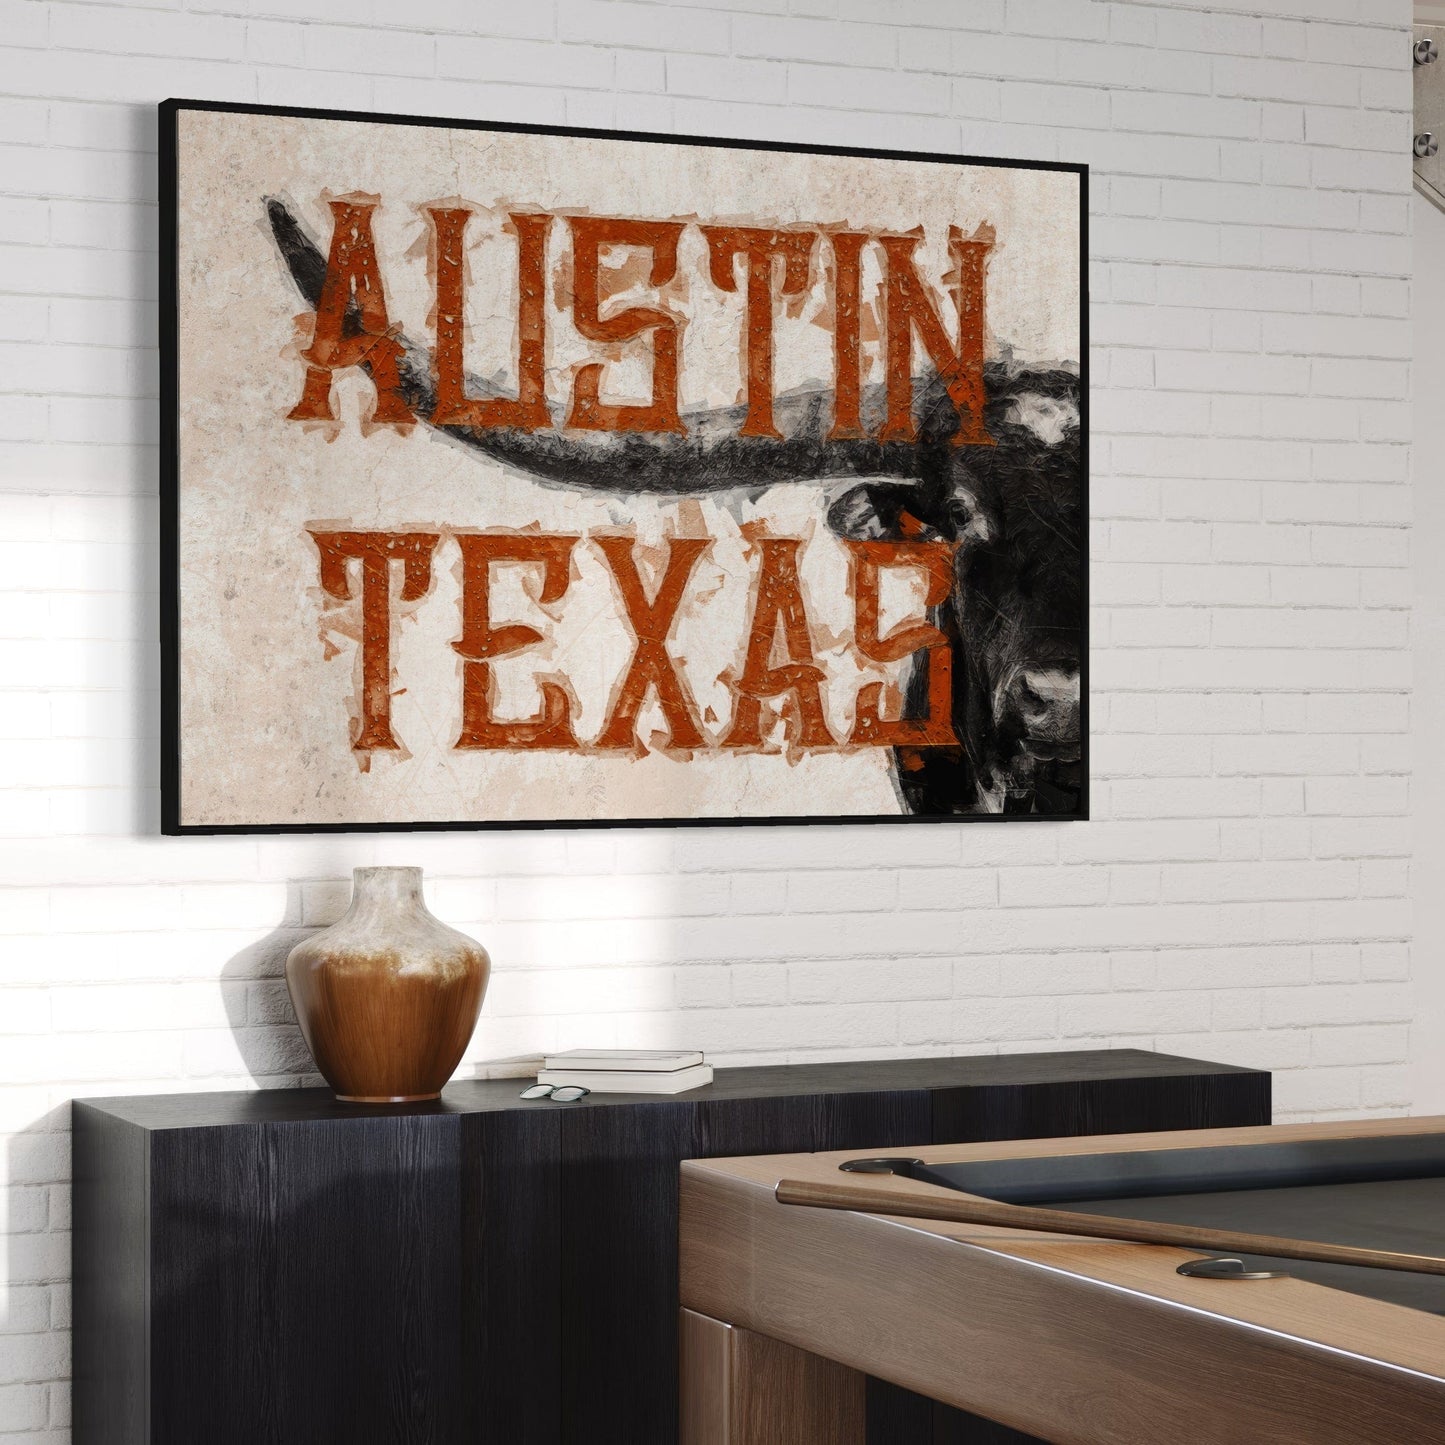 Austin Texas Print - Longhorn Wall Decor Wall Art Teri James Photography